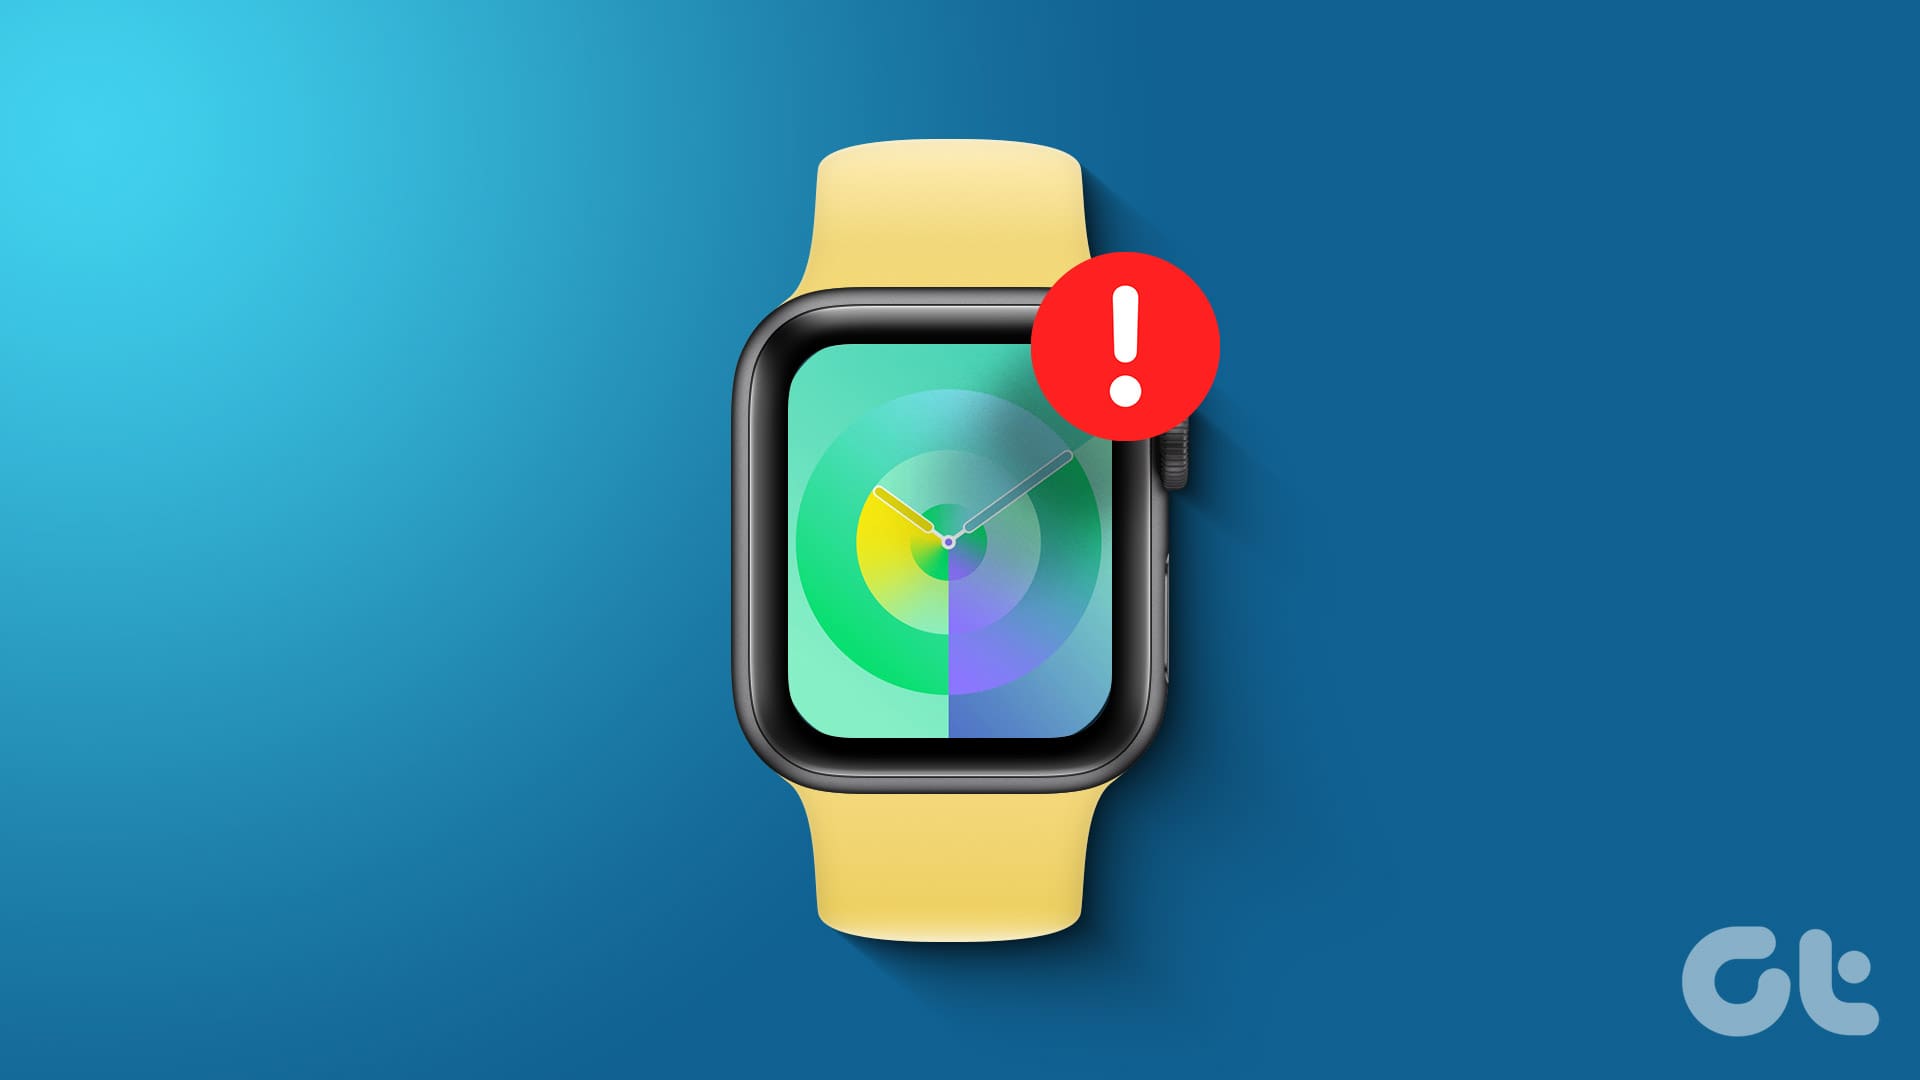 Apple Watch Always On Display Not Working